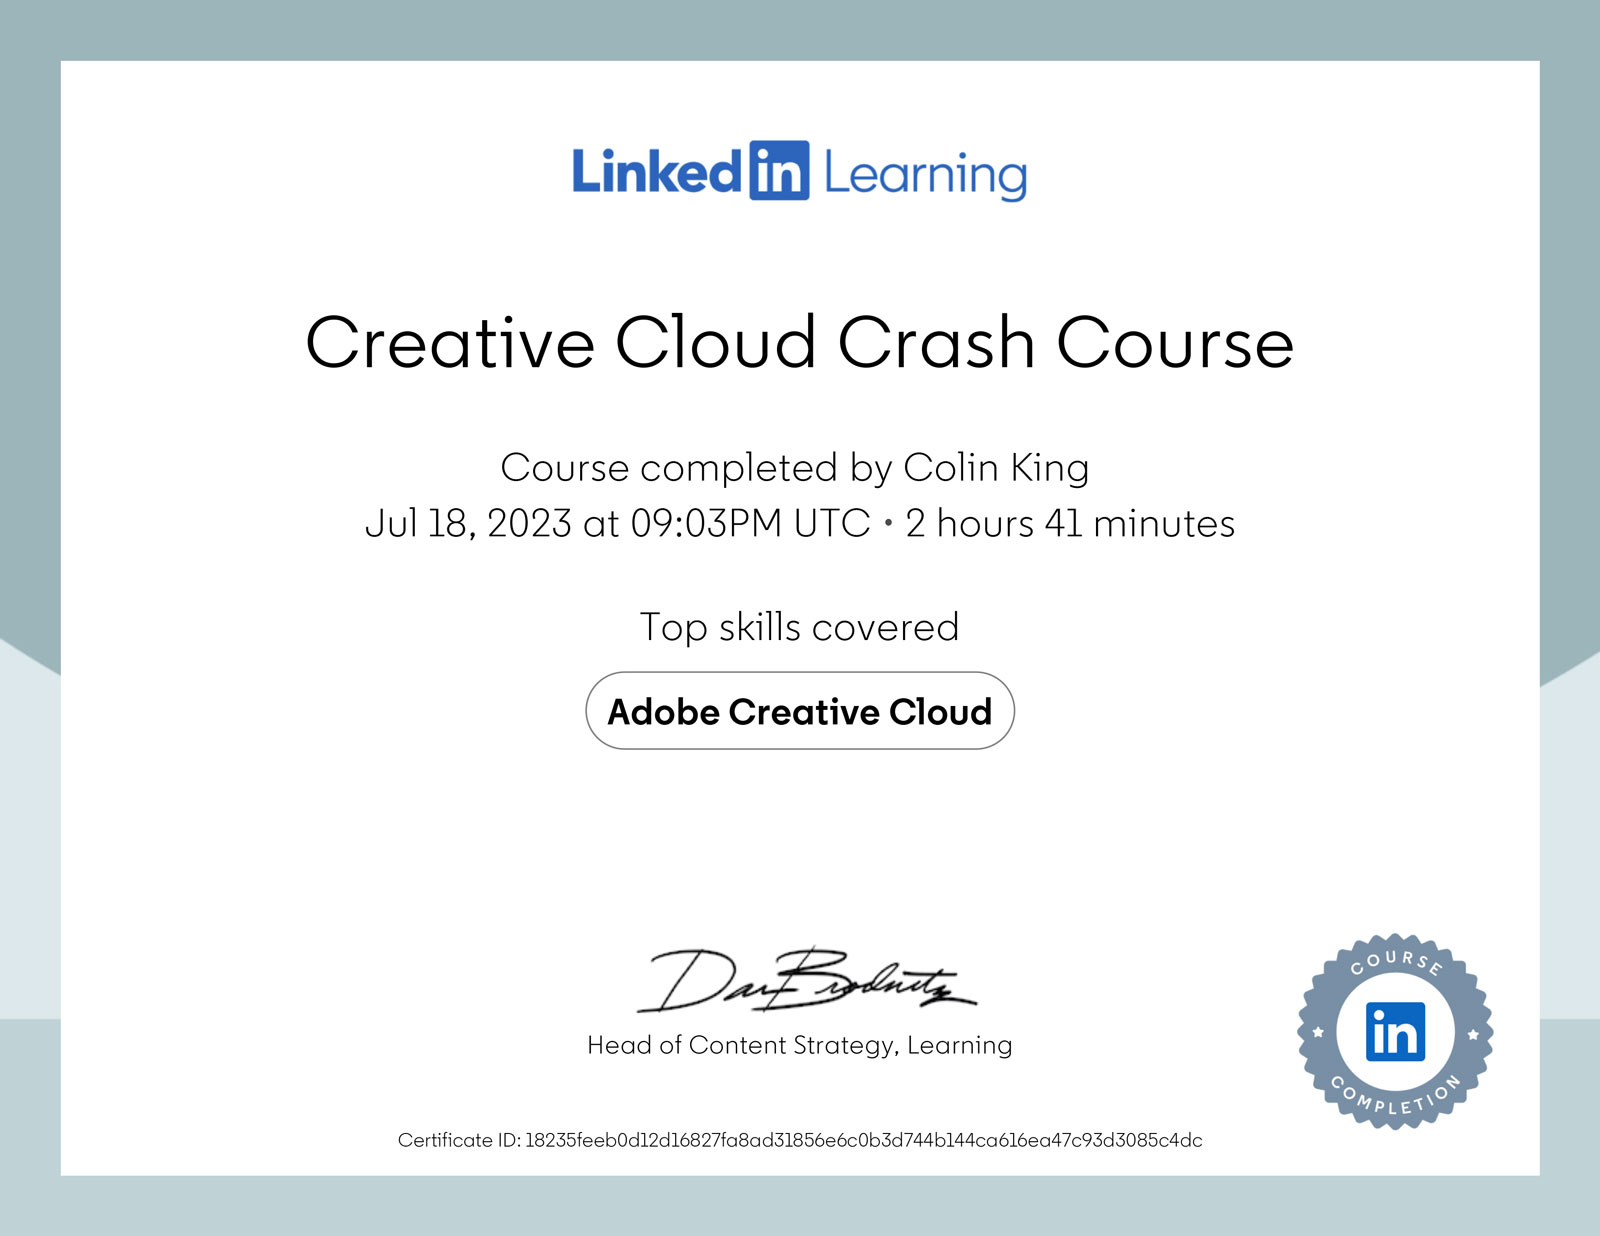 Certificate Of Completion creative cloud crash course